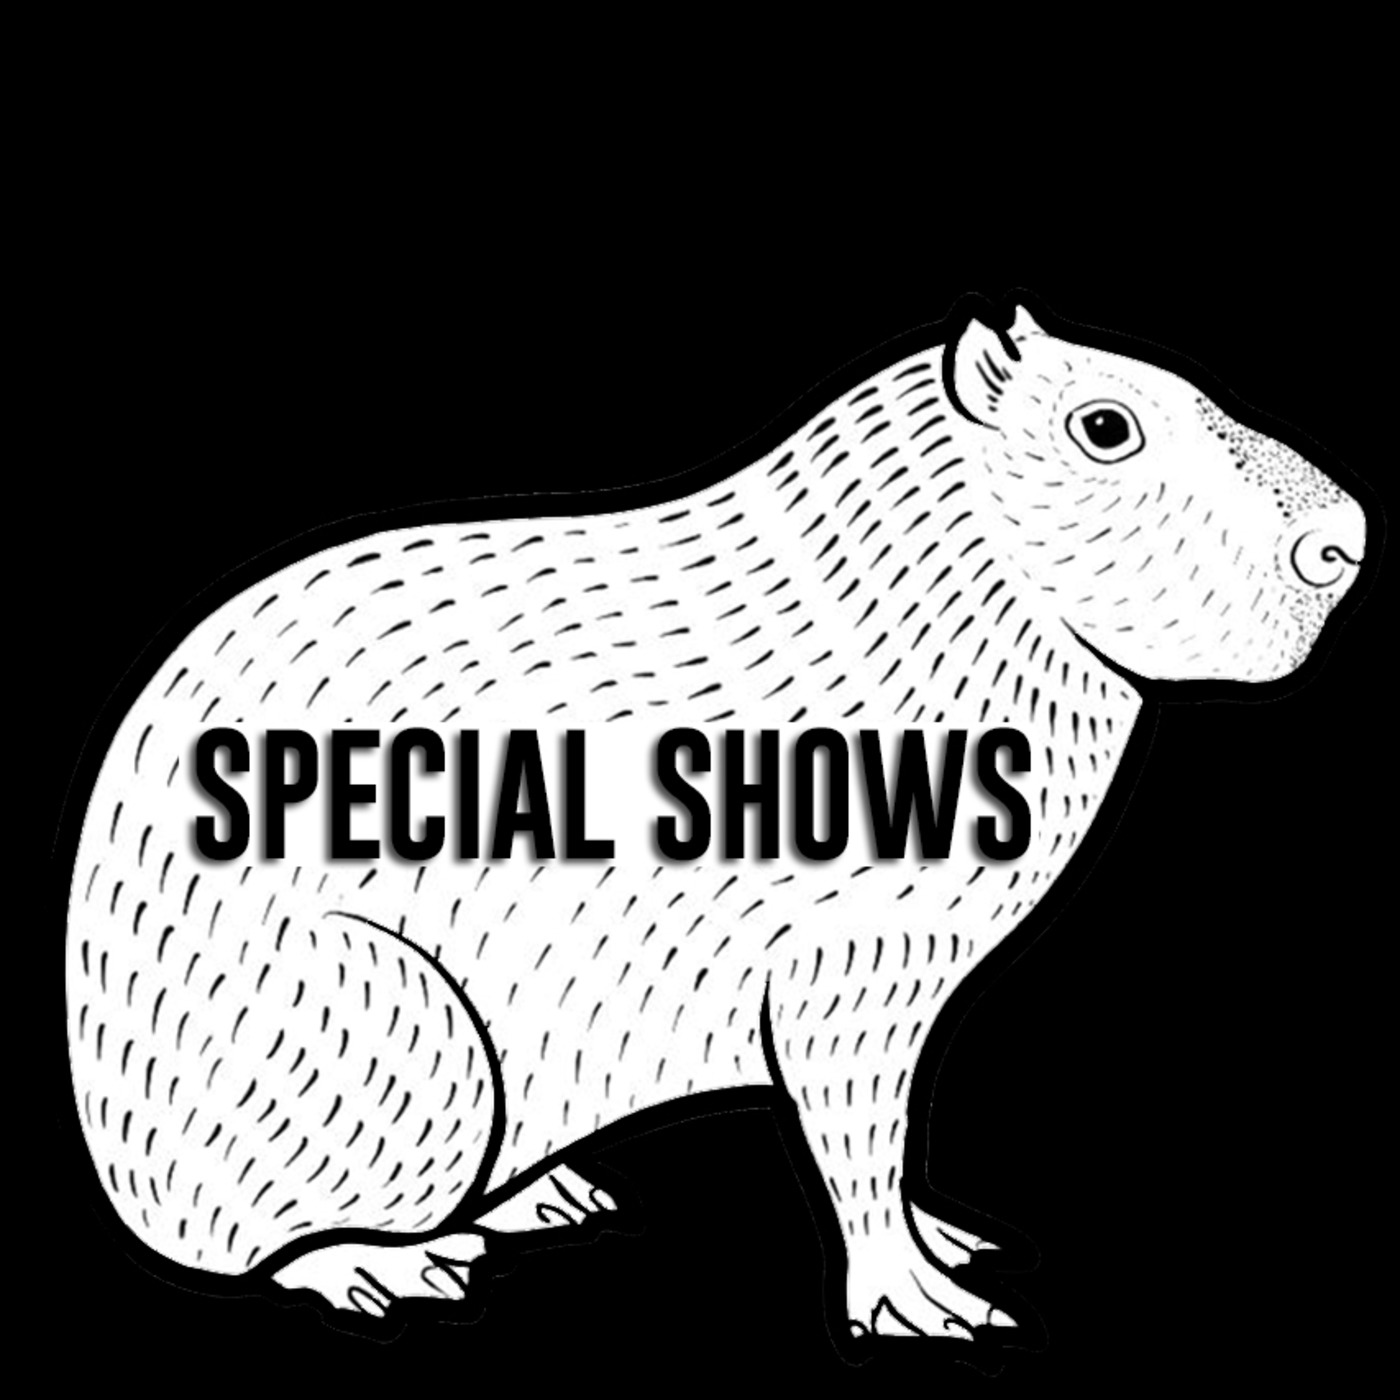 Radio Chiguiro - Special shows